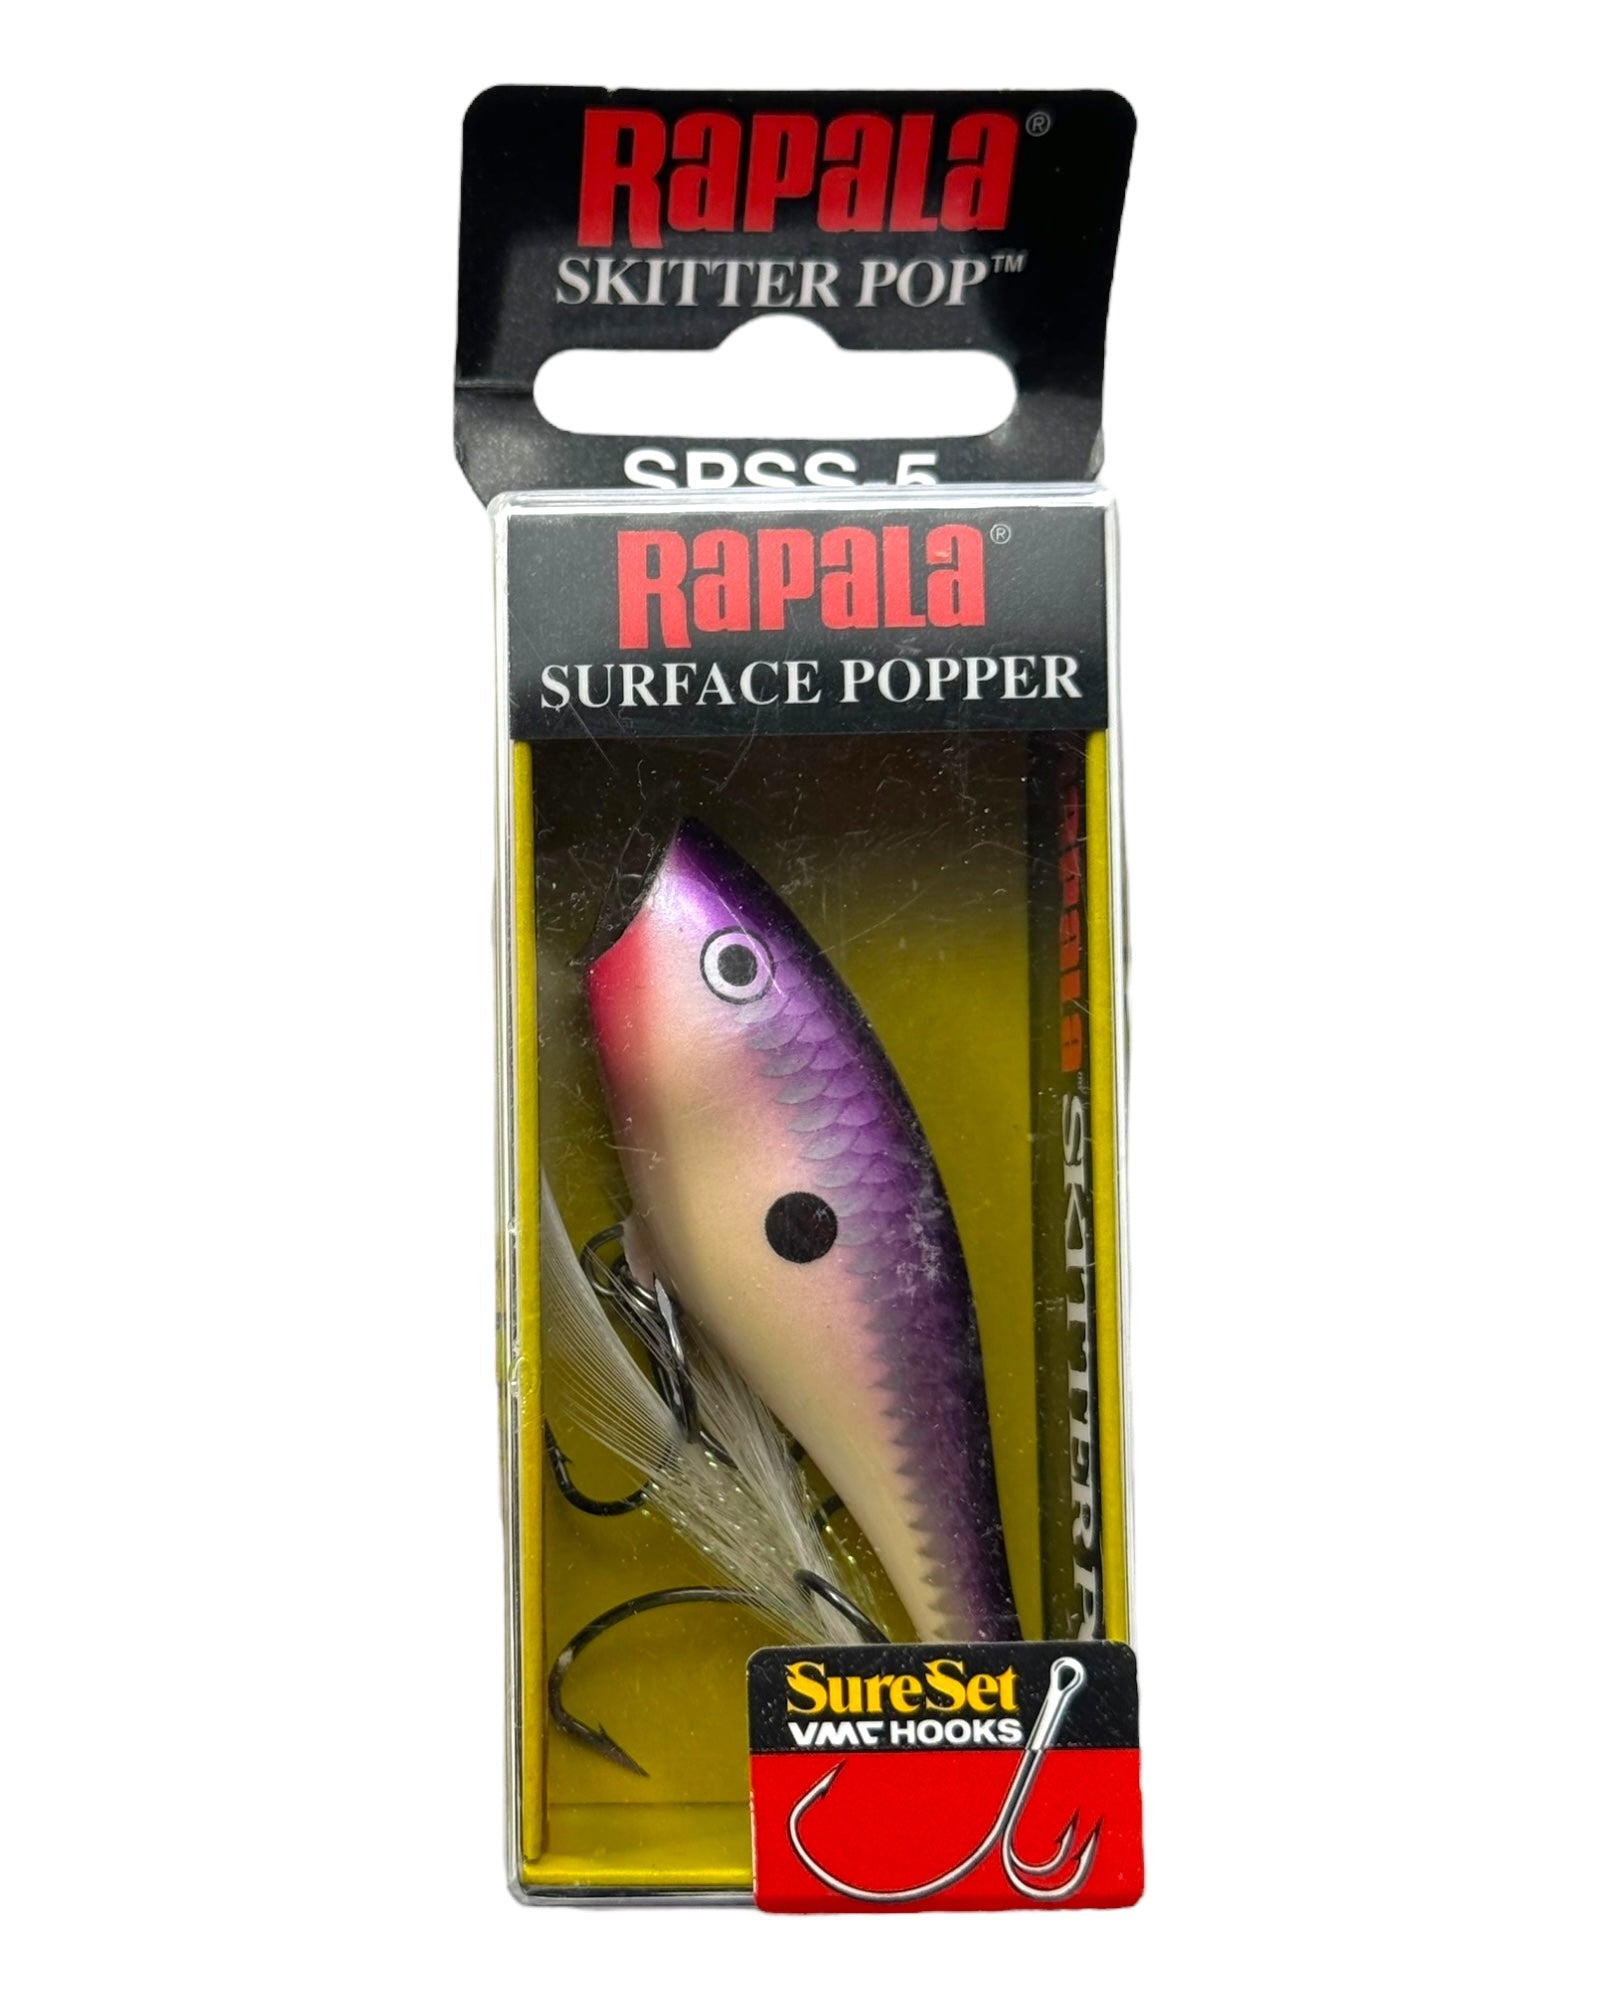 Rapala Skitter Pop 05 2 inch Topwater Popper